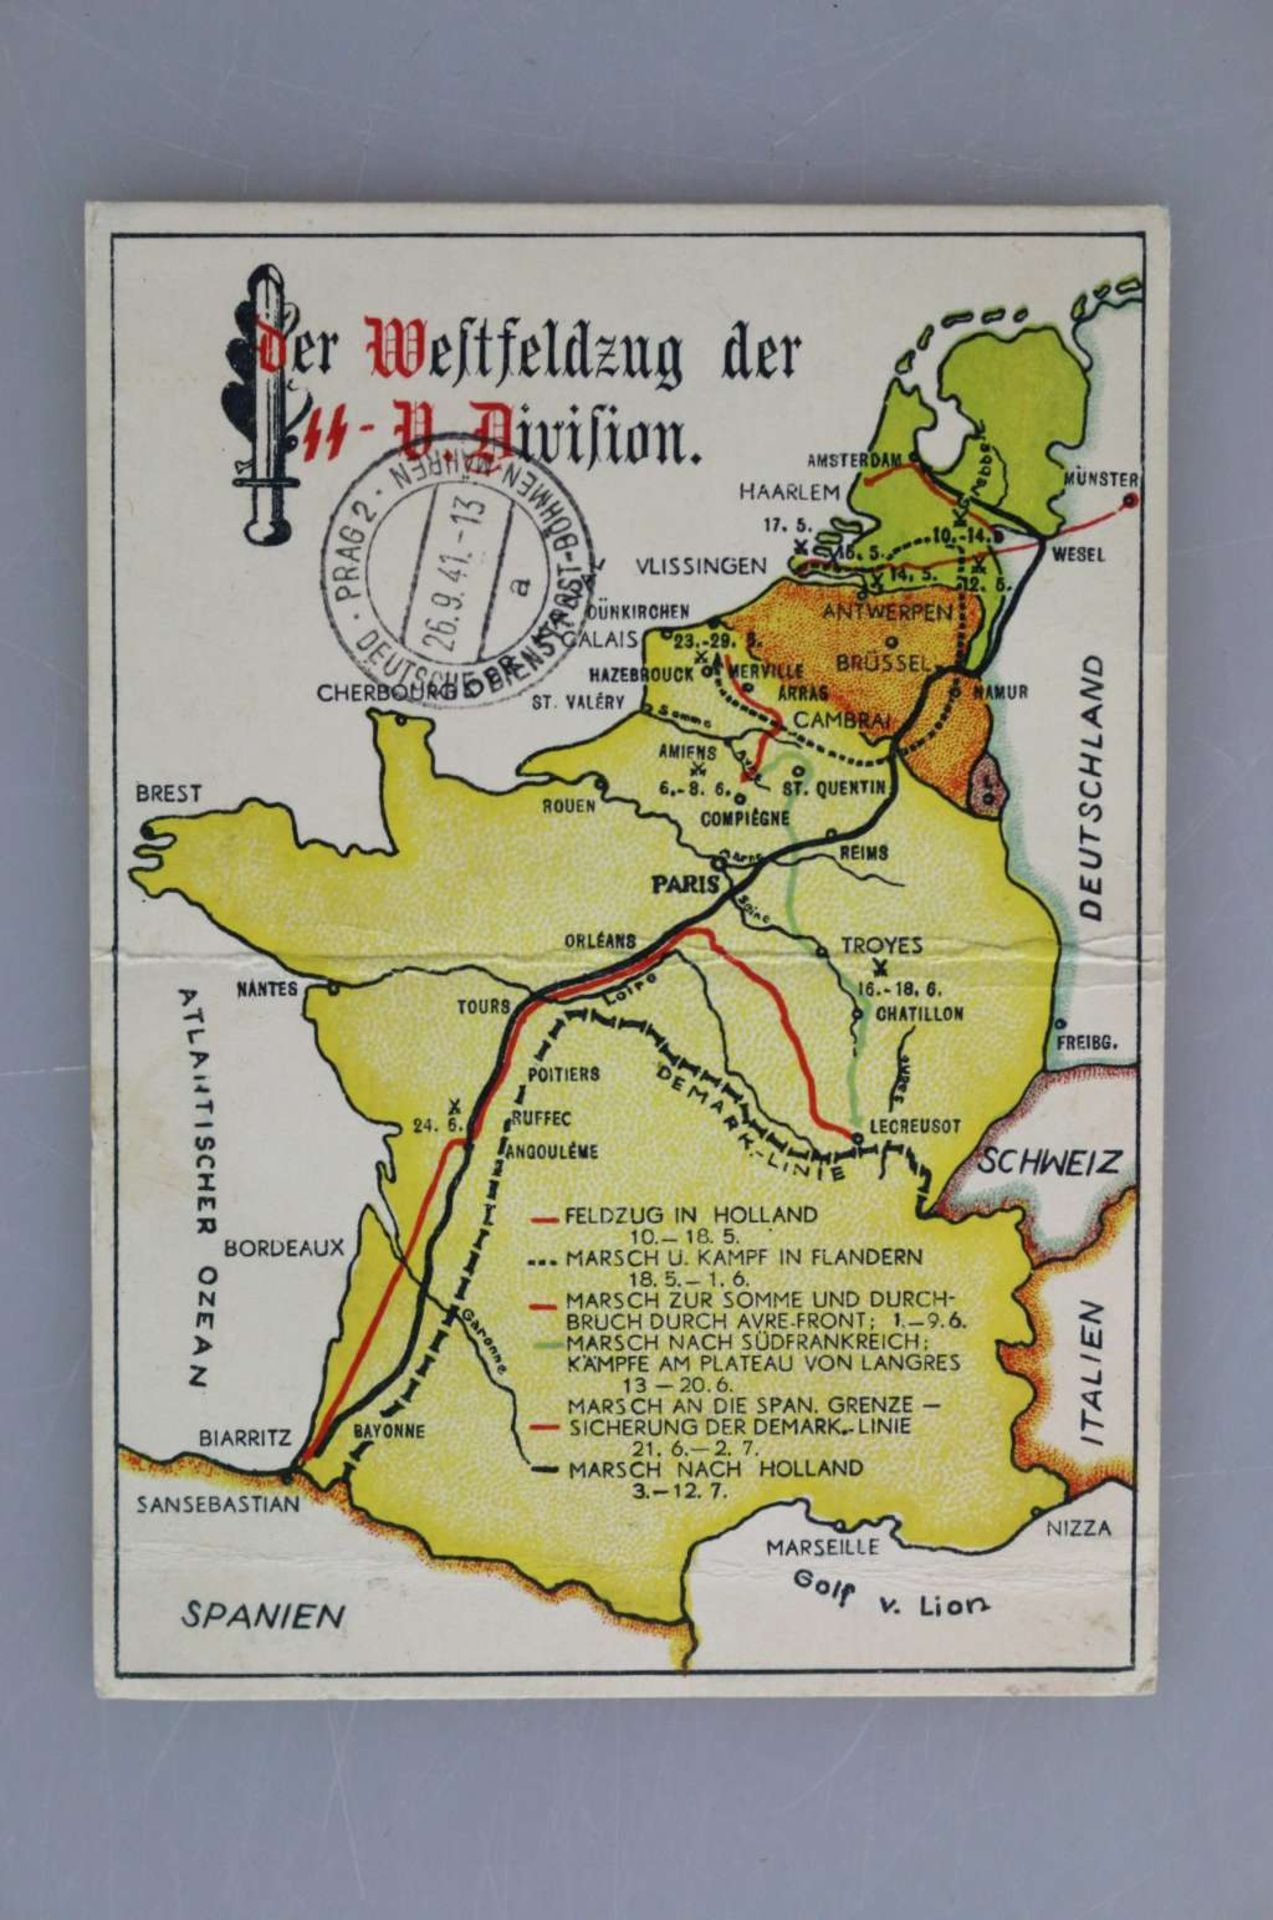 Waffen-SS, farbige Propaganda-Postkarte - Image 2 of 3